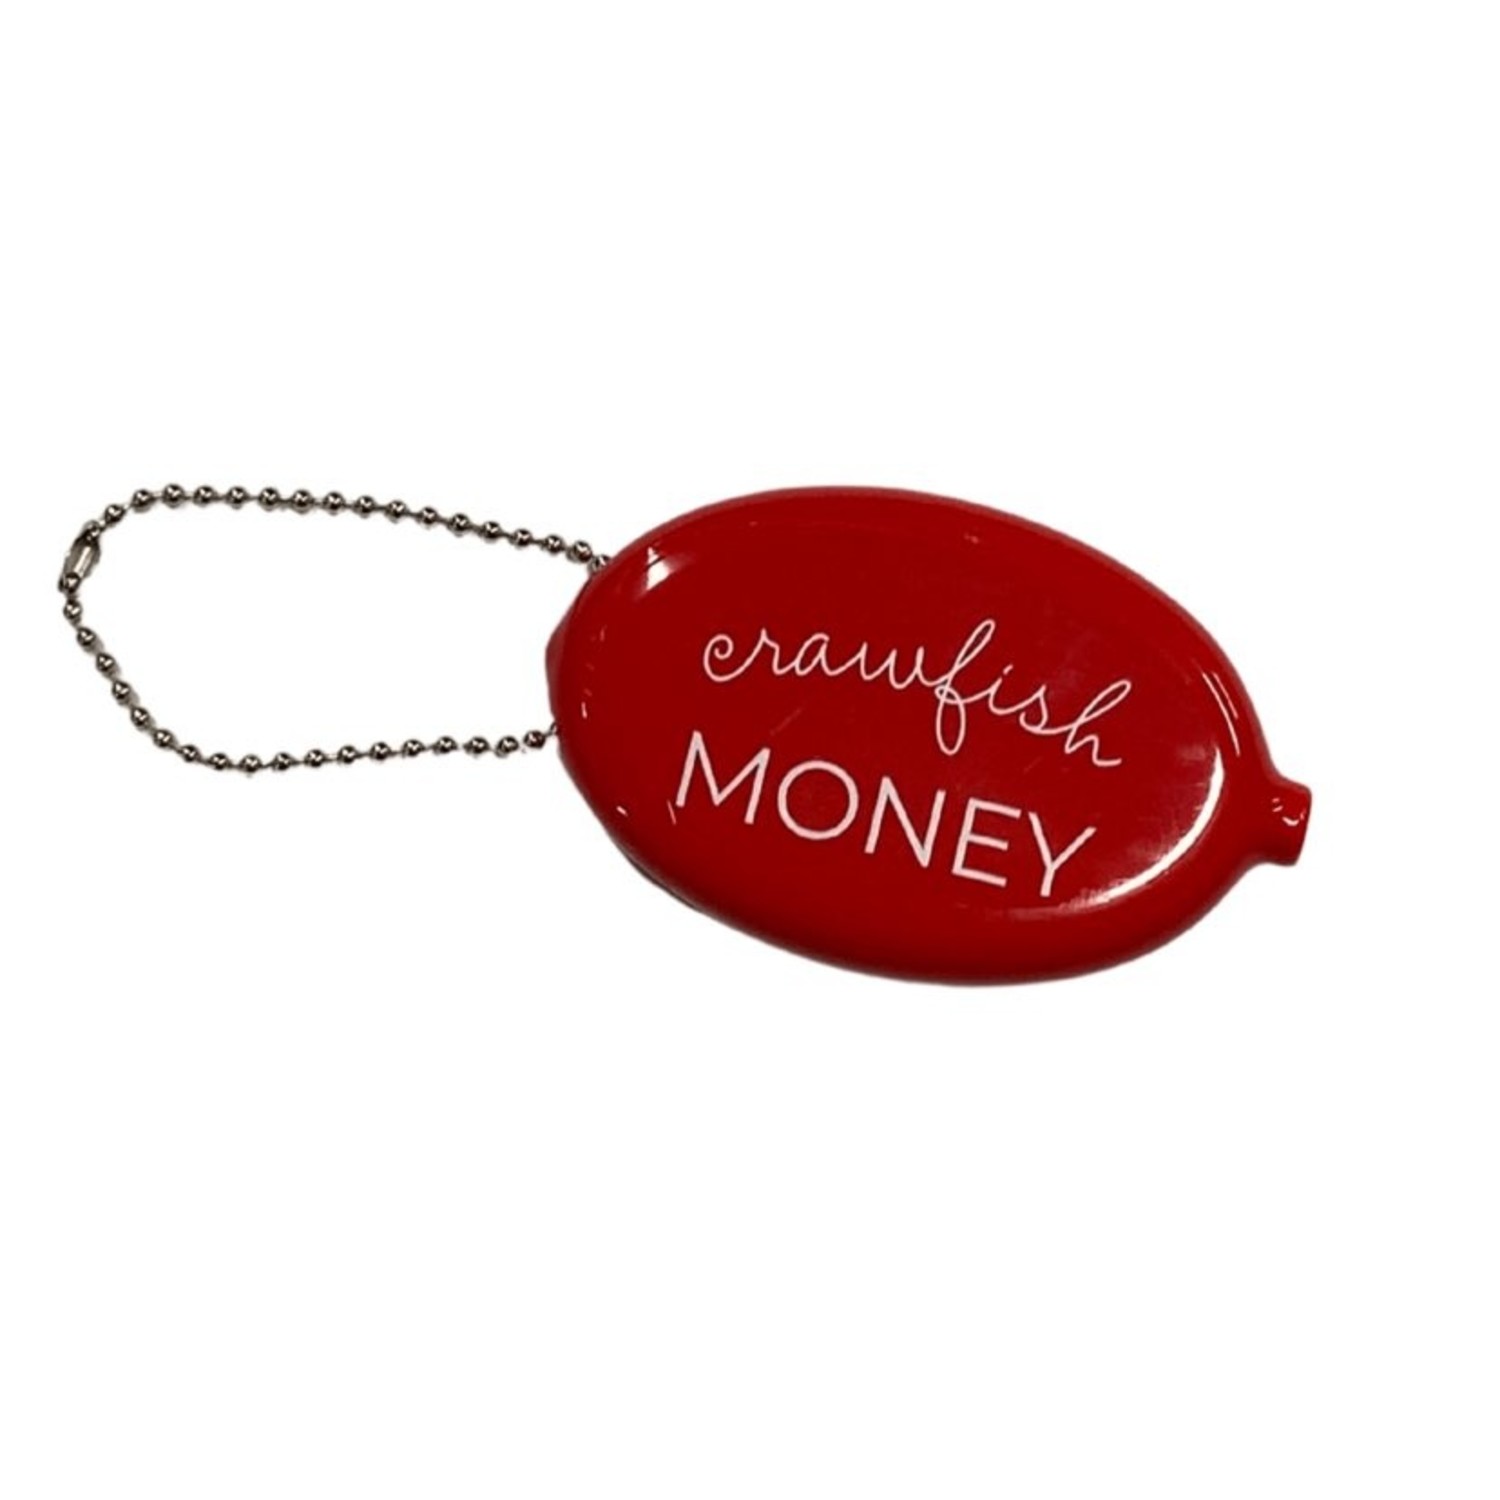 crawfish money coin pouch